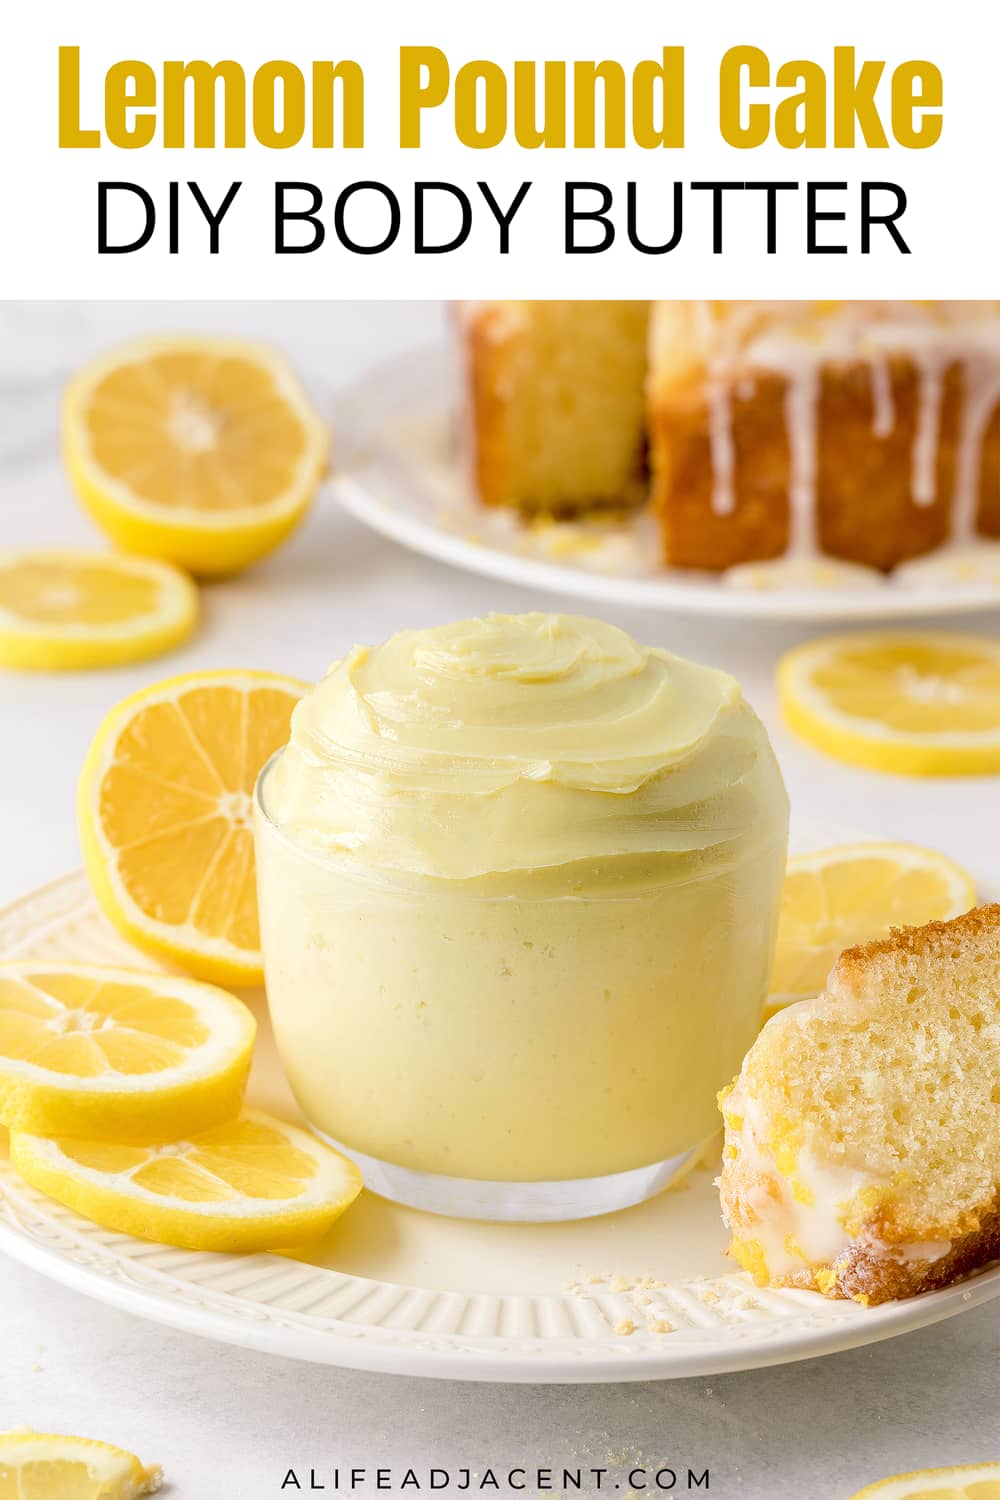 Lemon pound cake DIY body butter